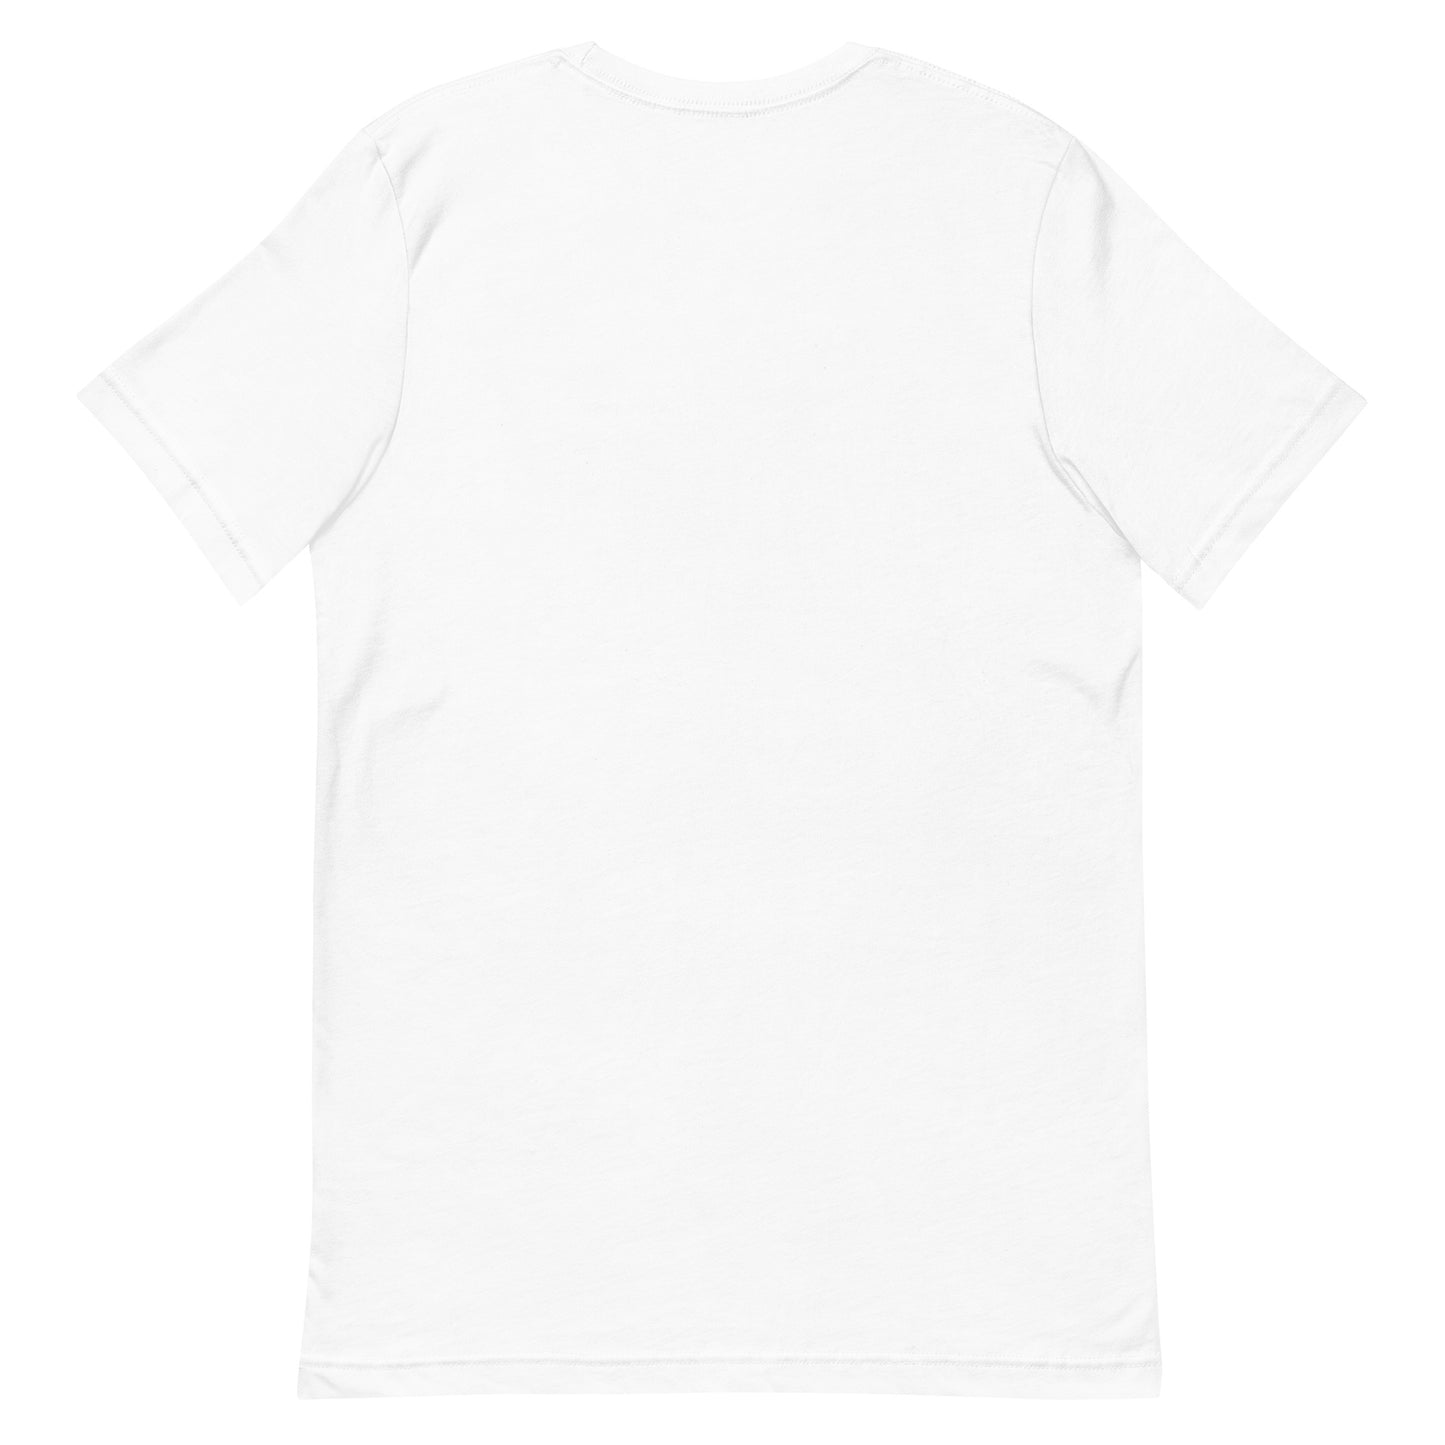 RIO Unisex T-Shirt